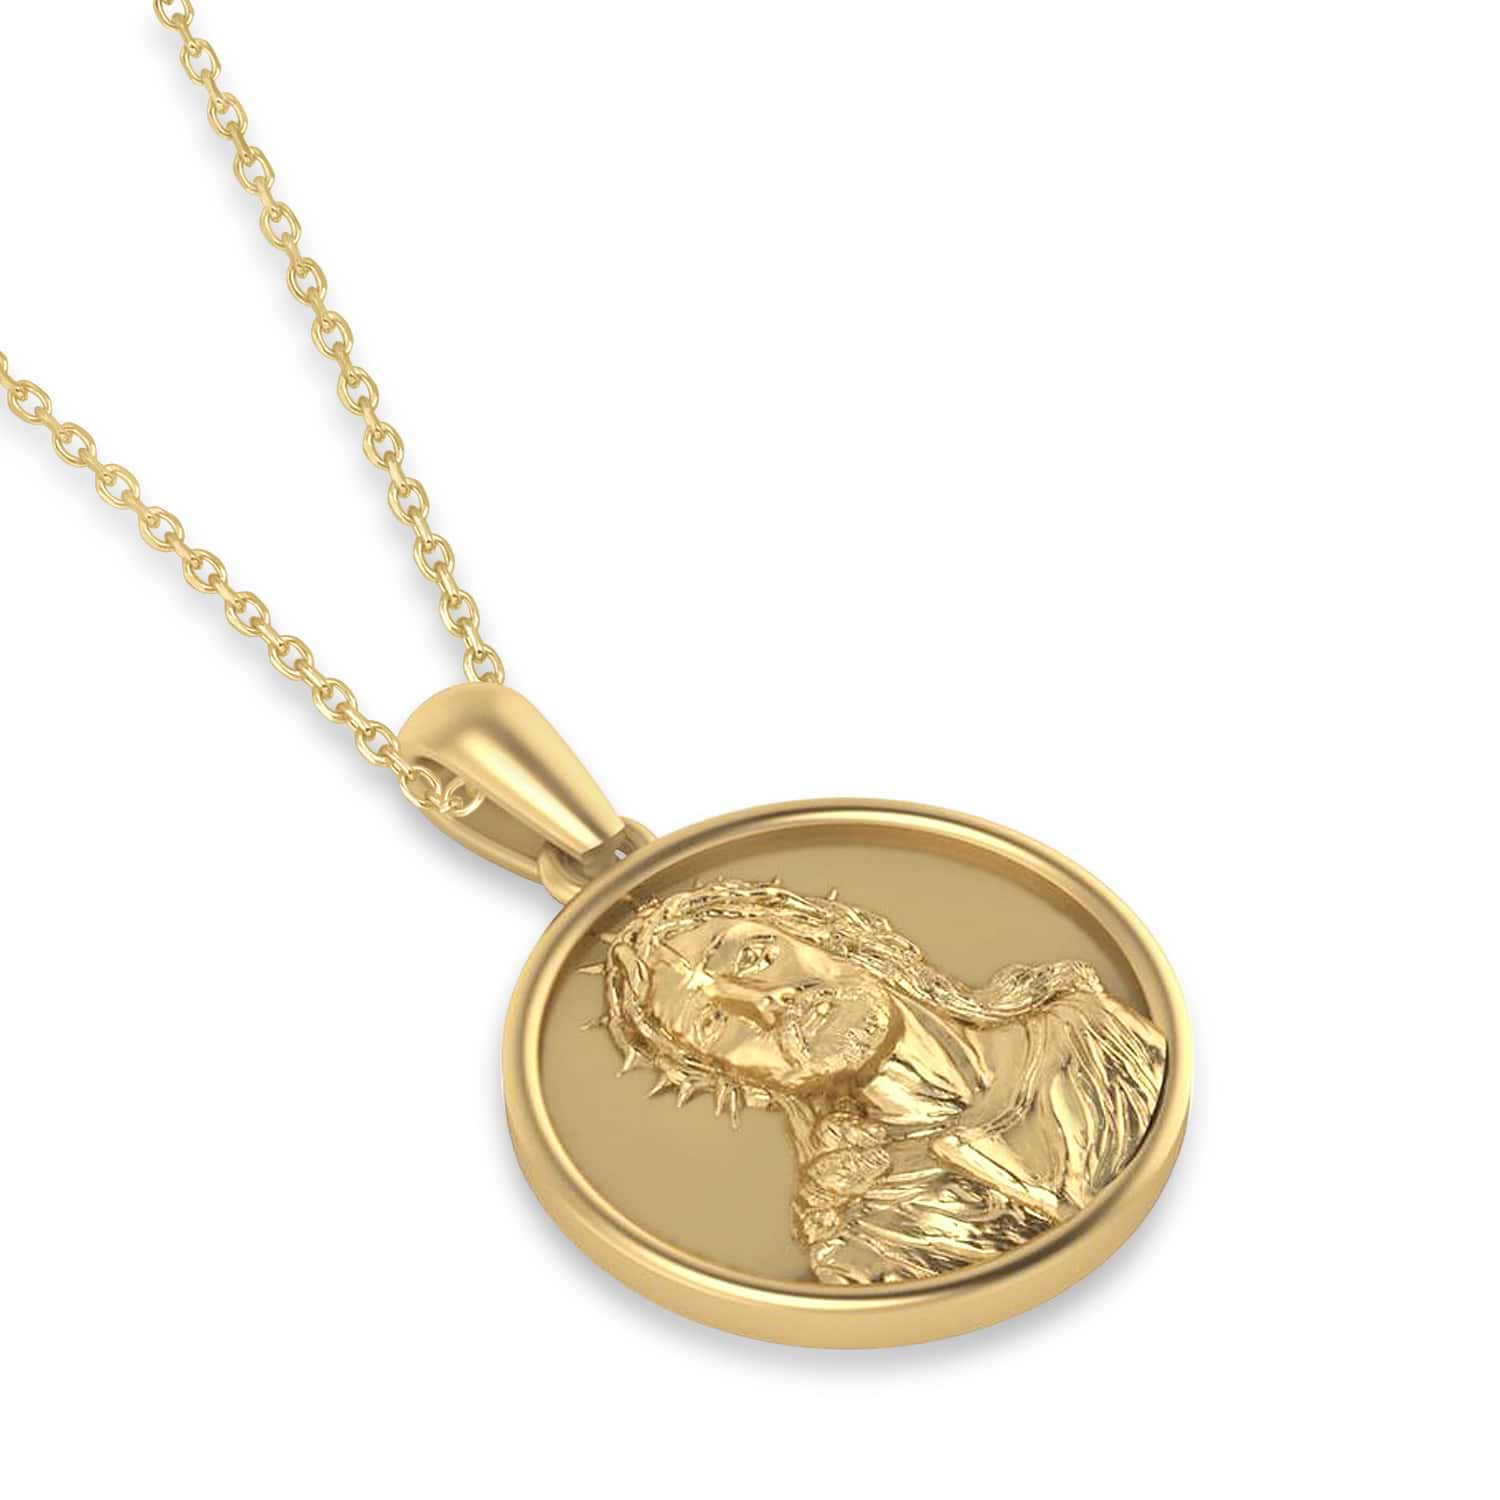 Jesus Christ Medal Pendant Necklace 14k Yellow Gold